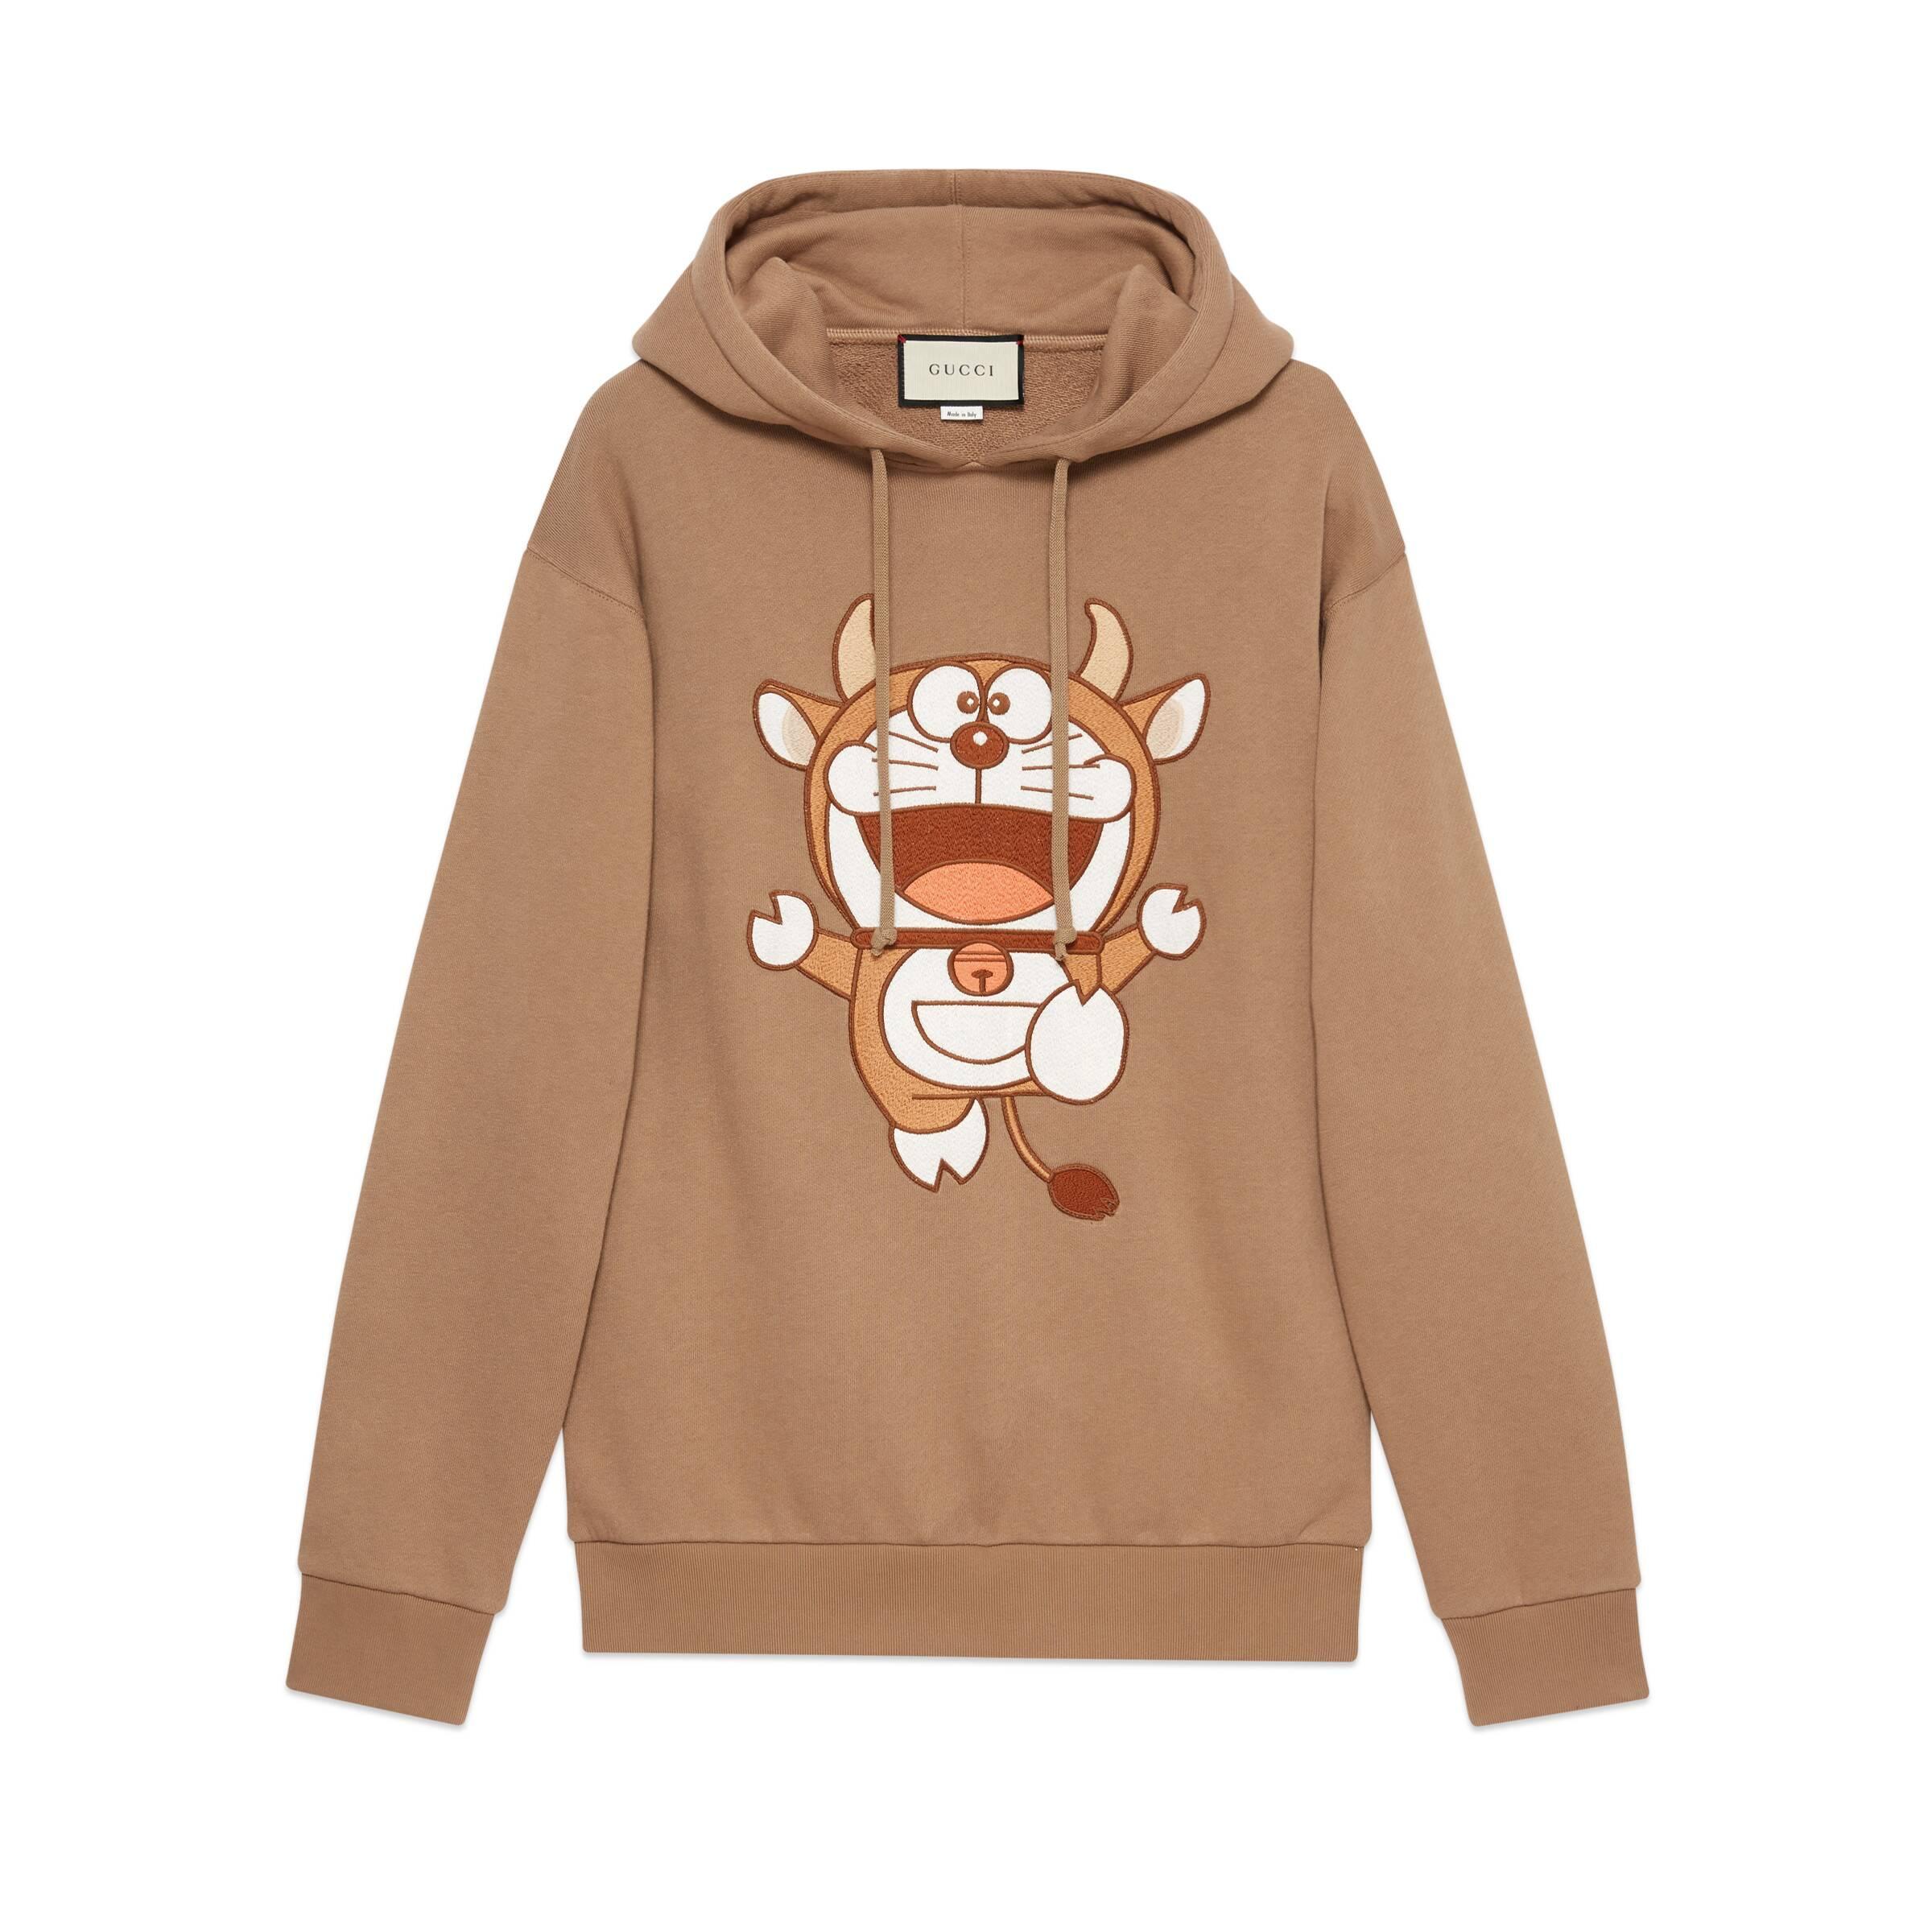 Gucci Doraemon X Hooded Sweatshirt in Brown | Lyst